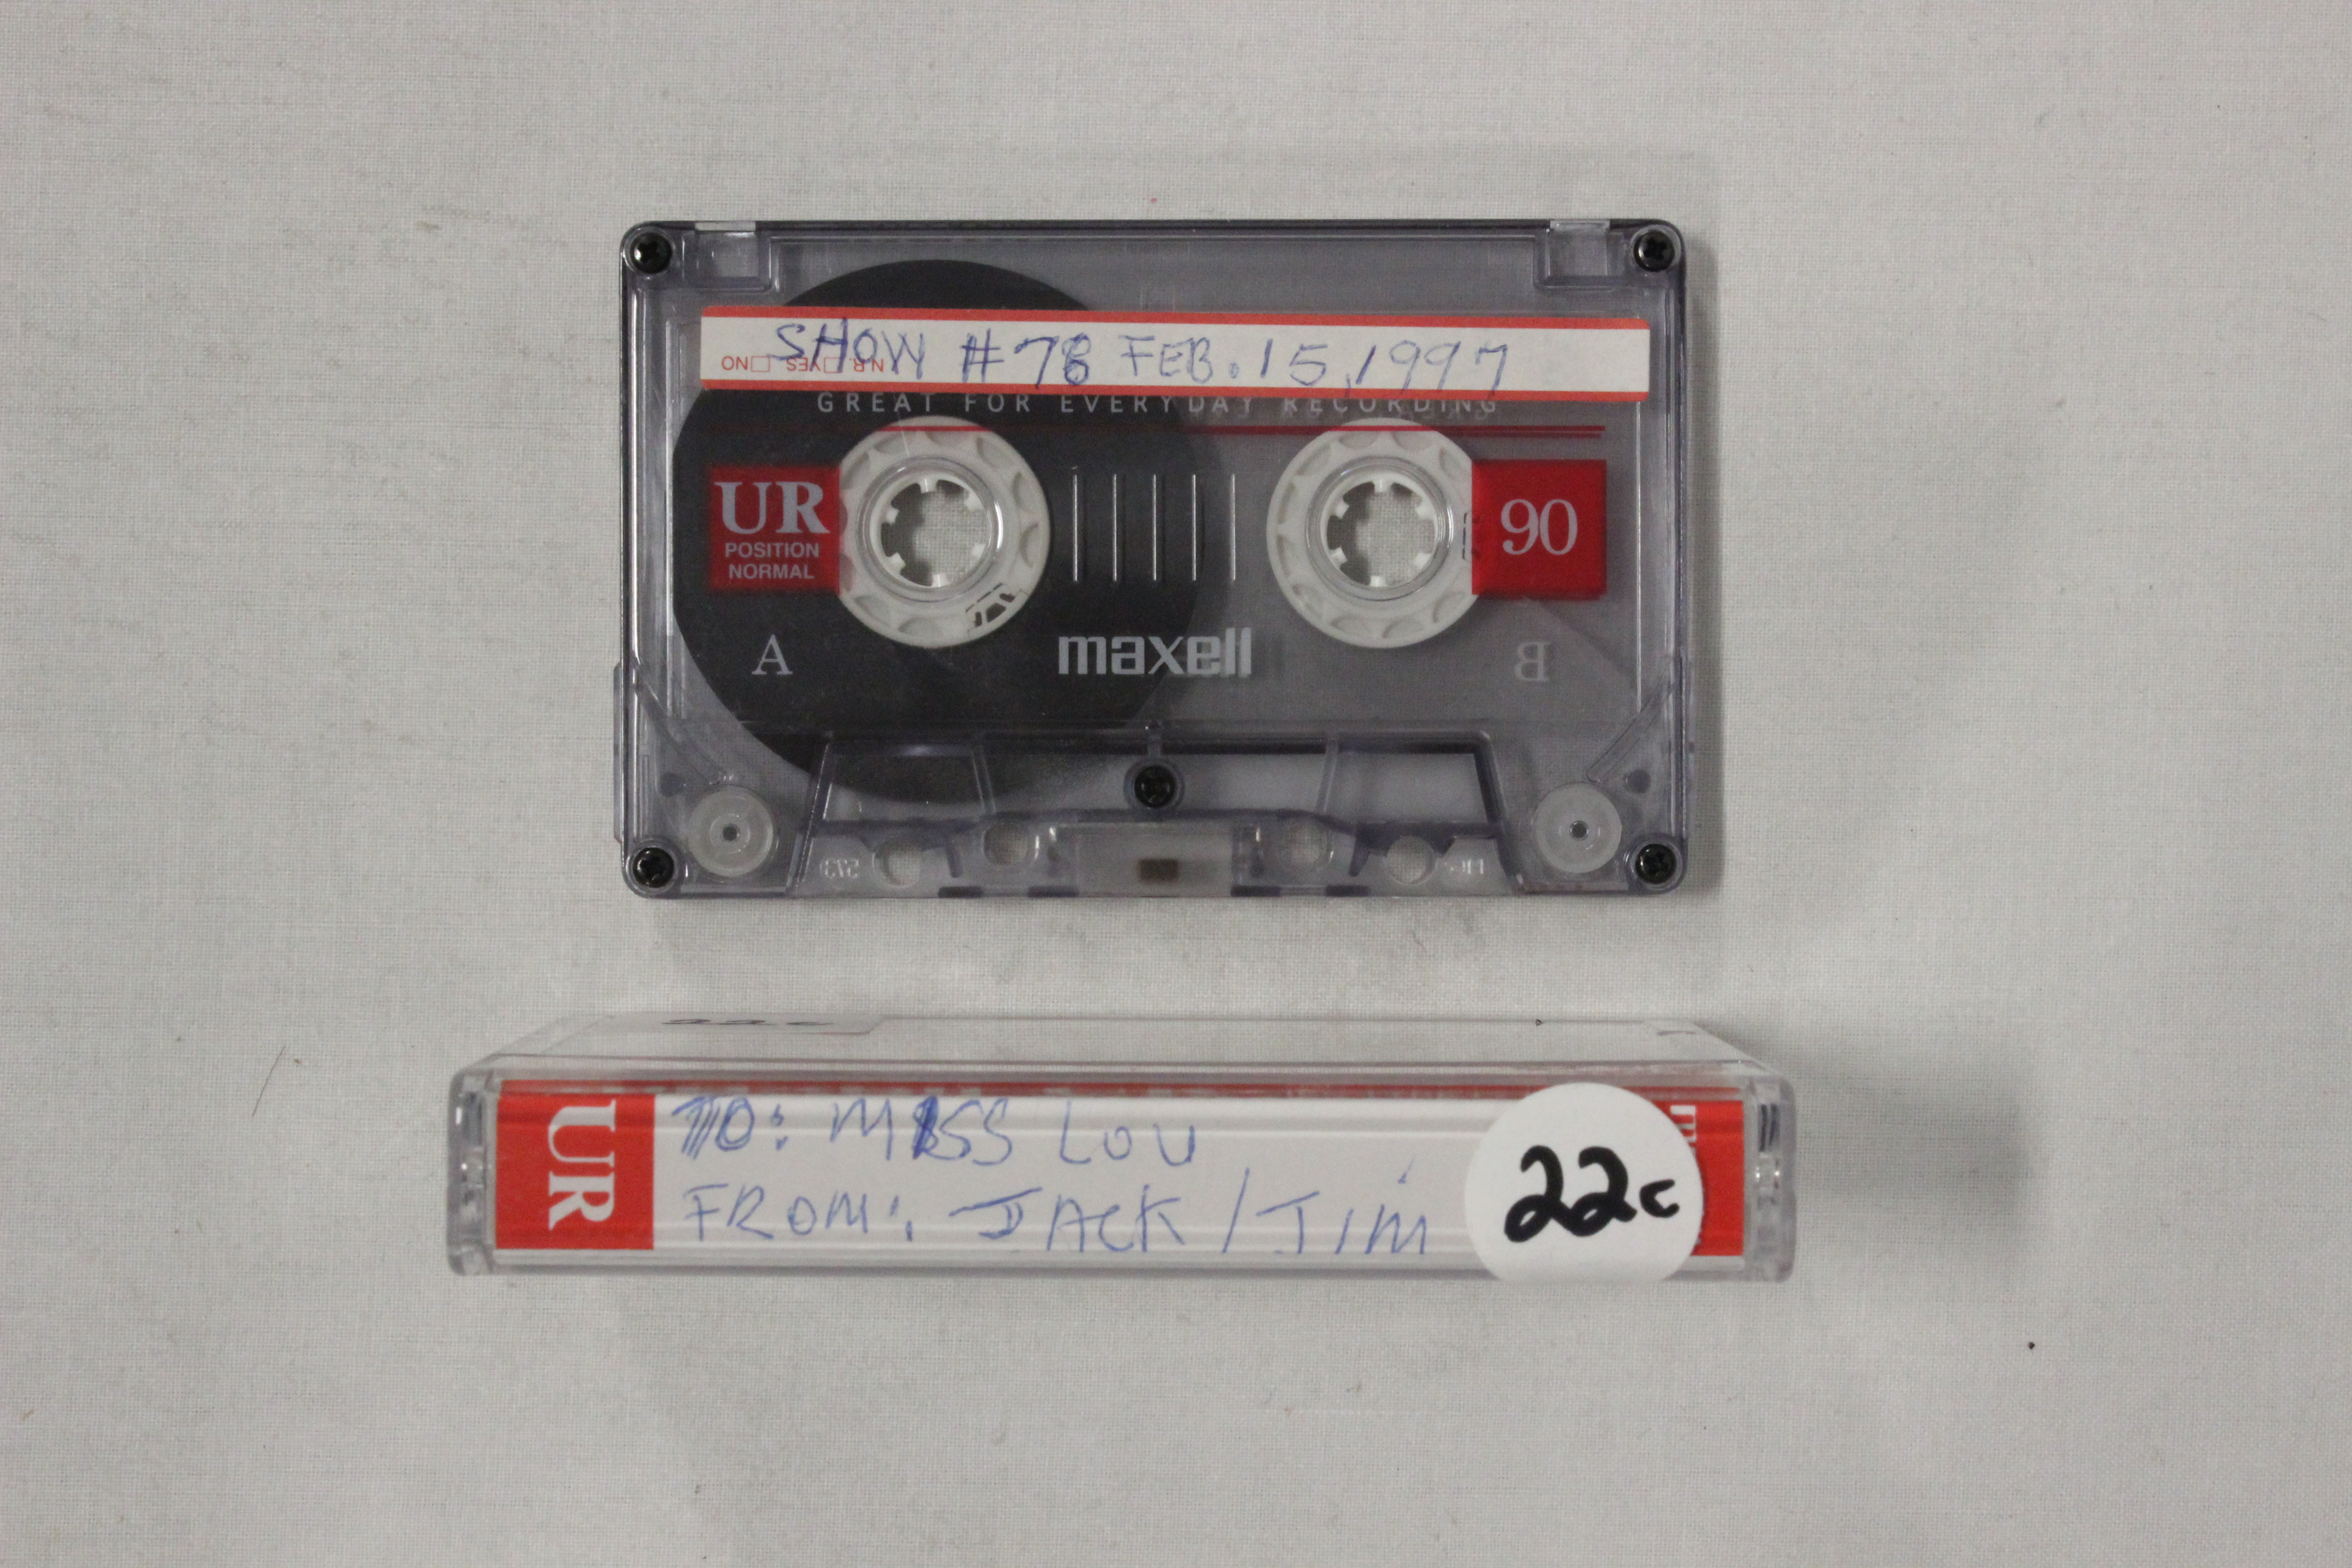 CFRU 93.3 FM, Guelph,  show 78 on 1[5] Feb. 3 1997 - Part 1